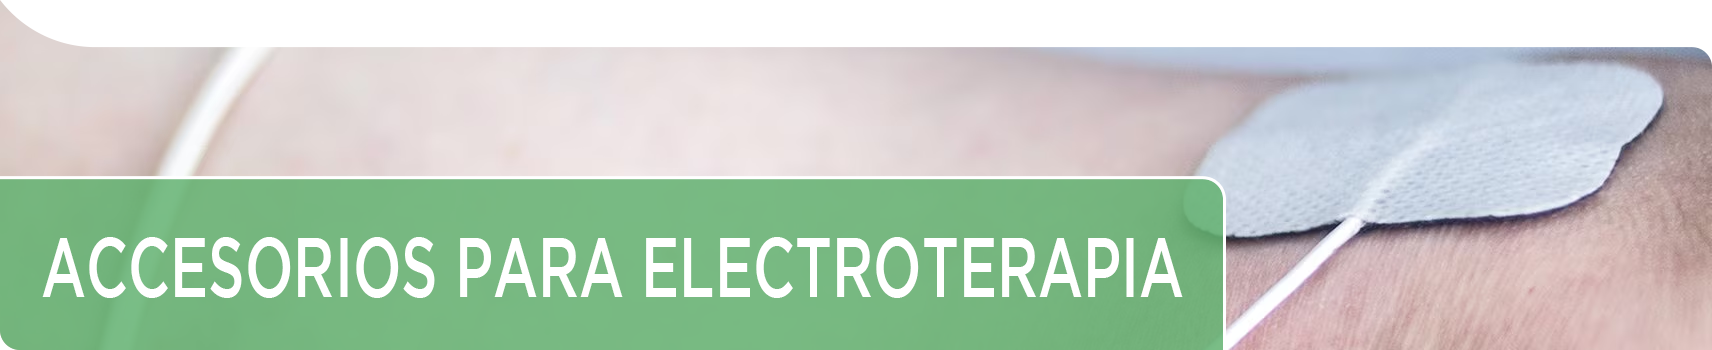 Accesorios de electroterapia | Comprar online